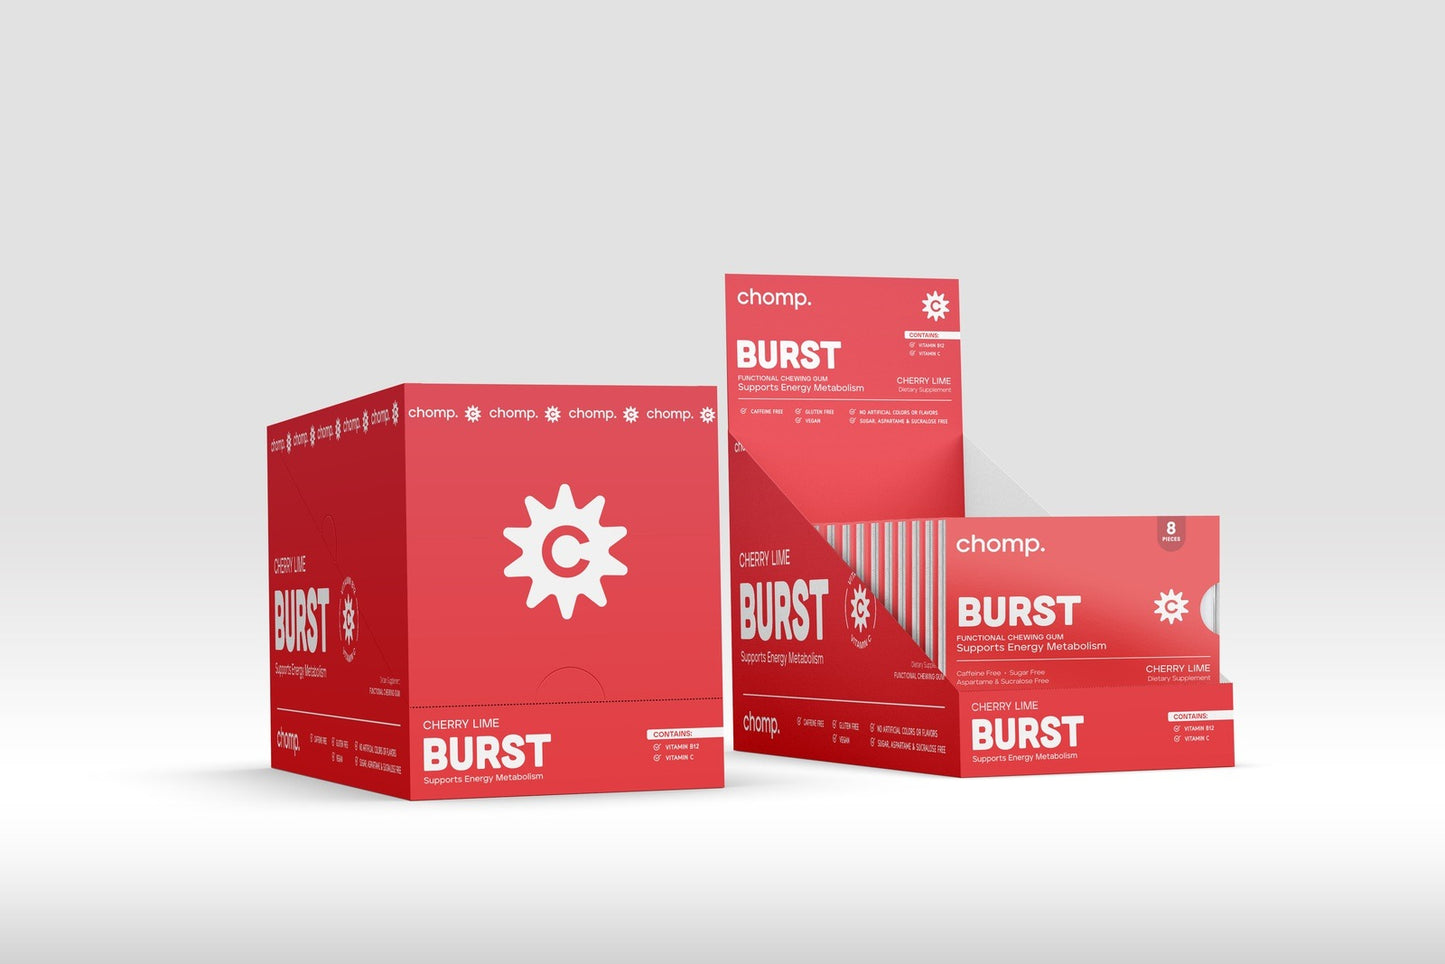 Burst Energy Gum